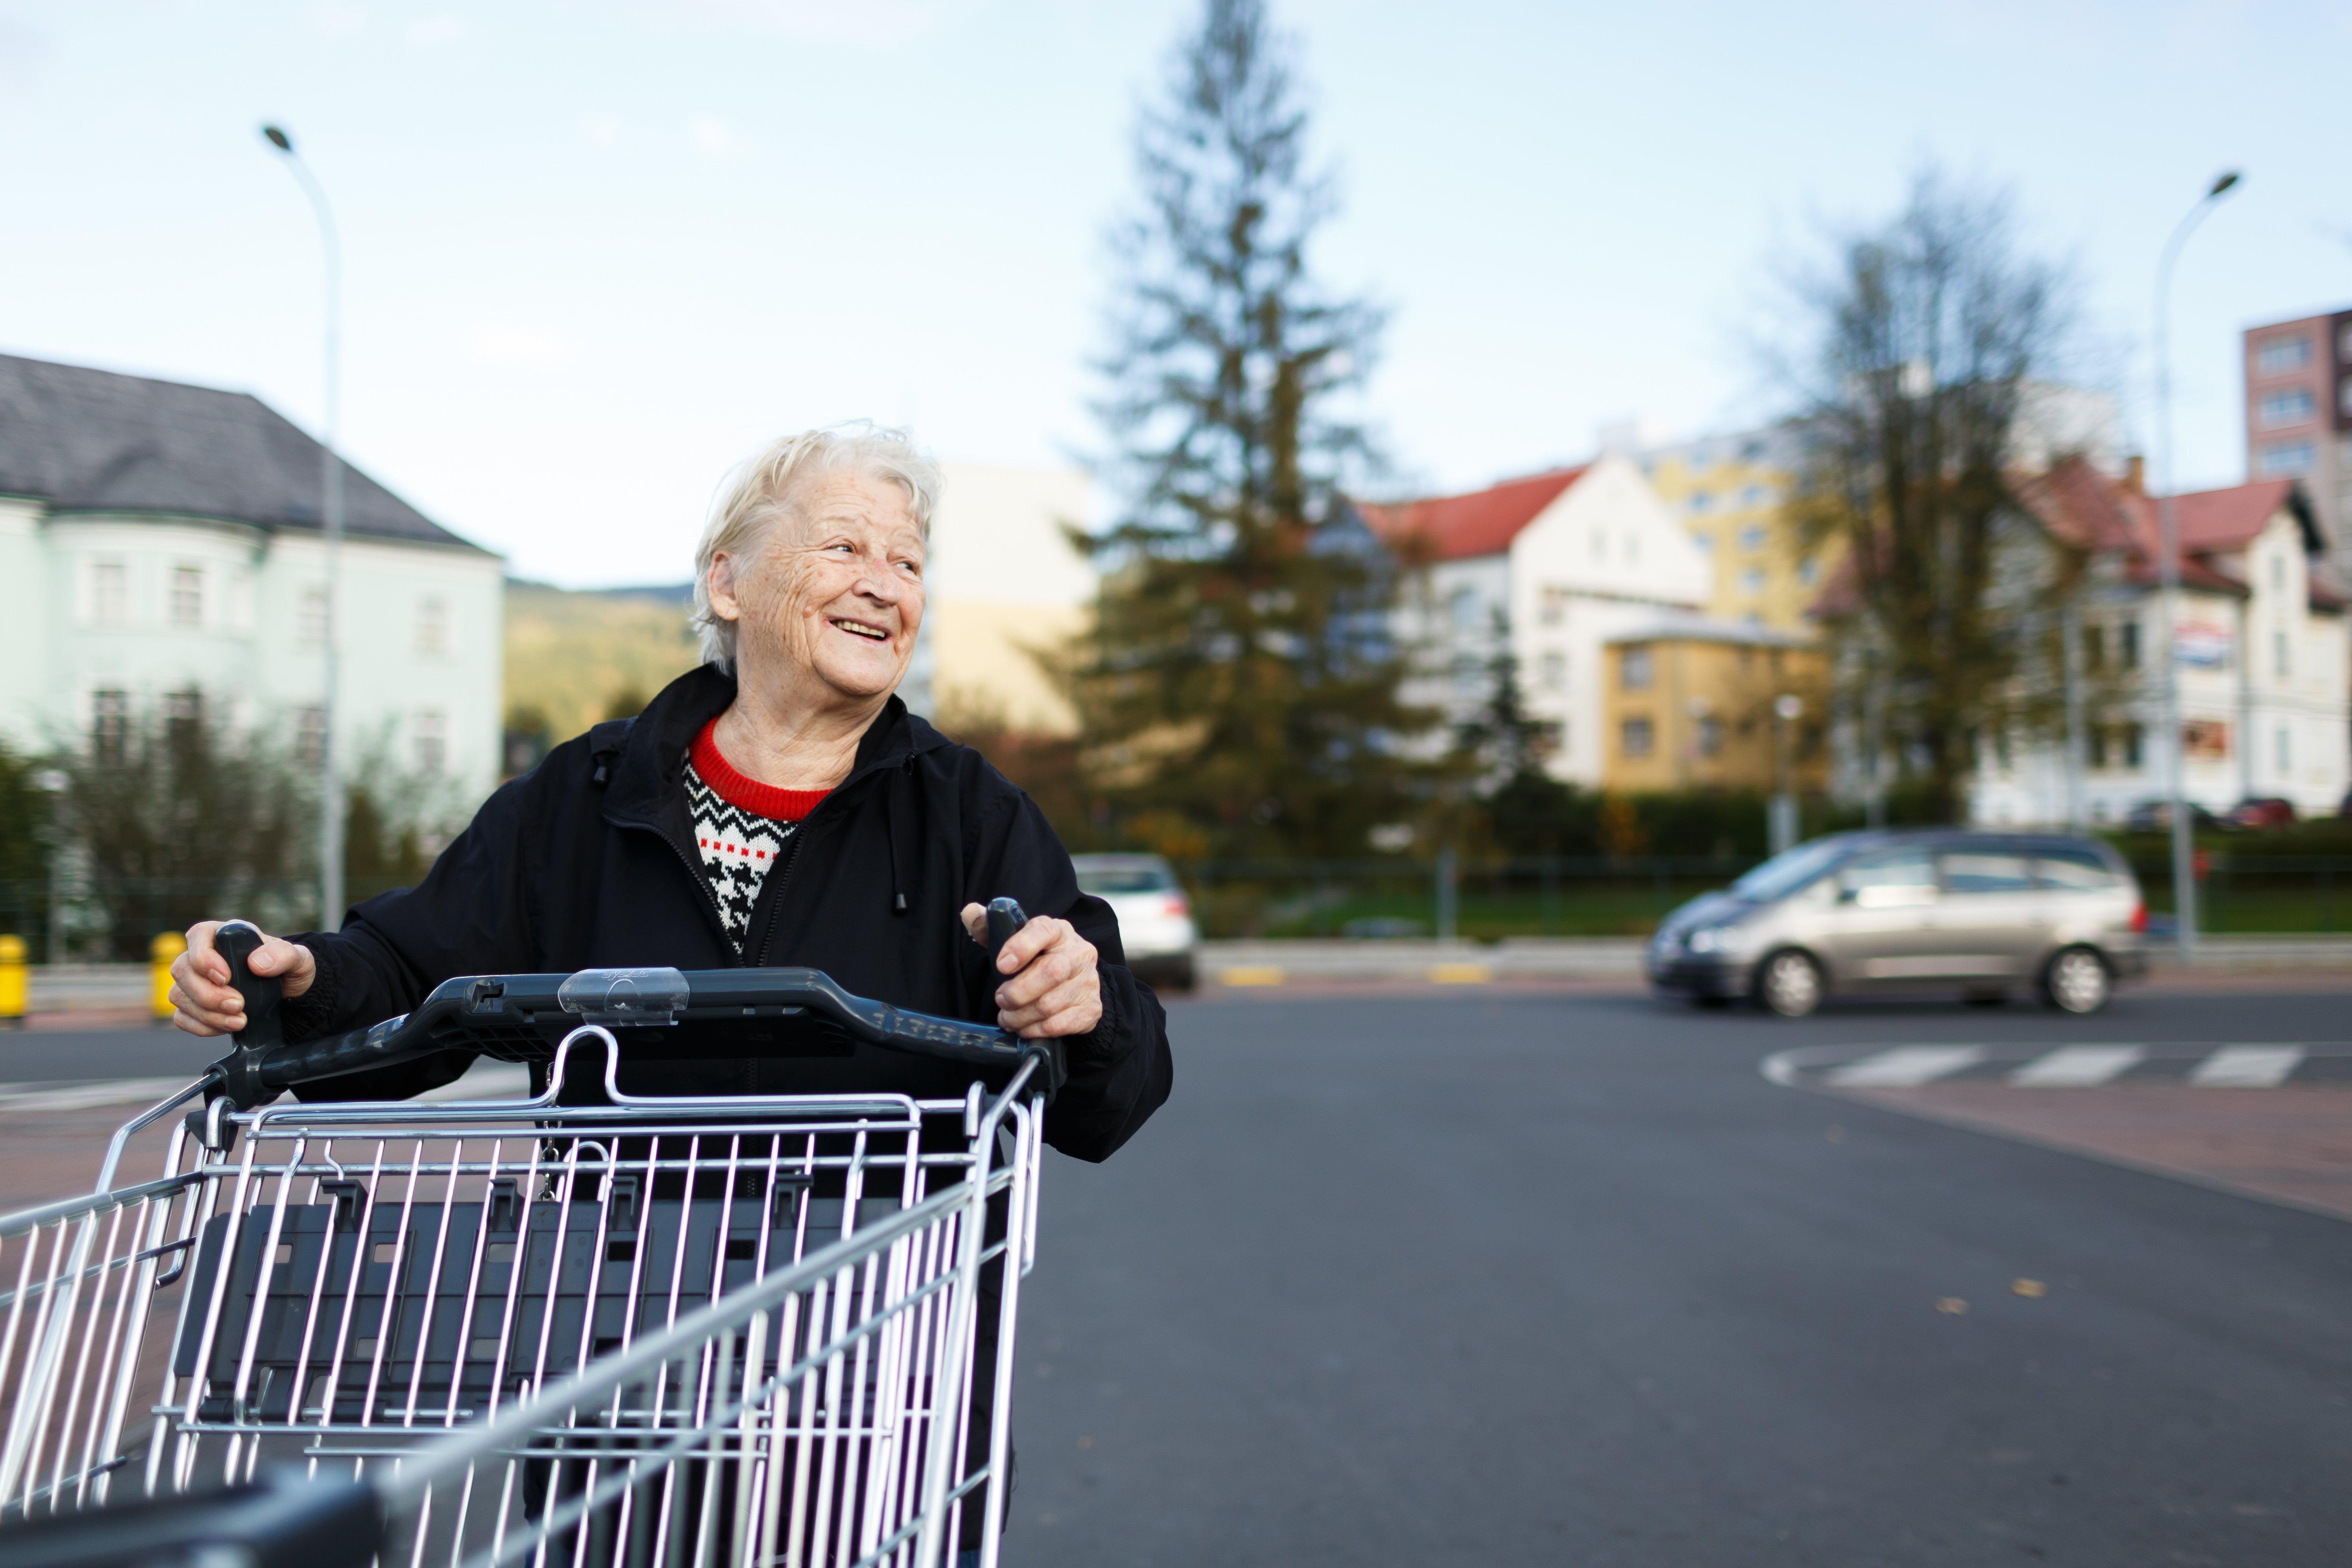 Anciana con carrito de supermercado. || Fuente: Shutterstock